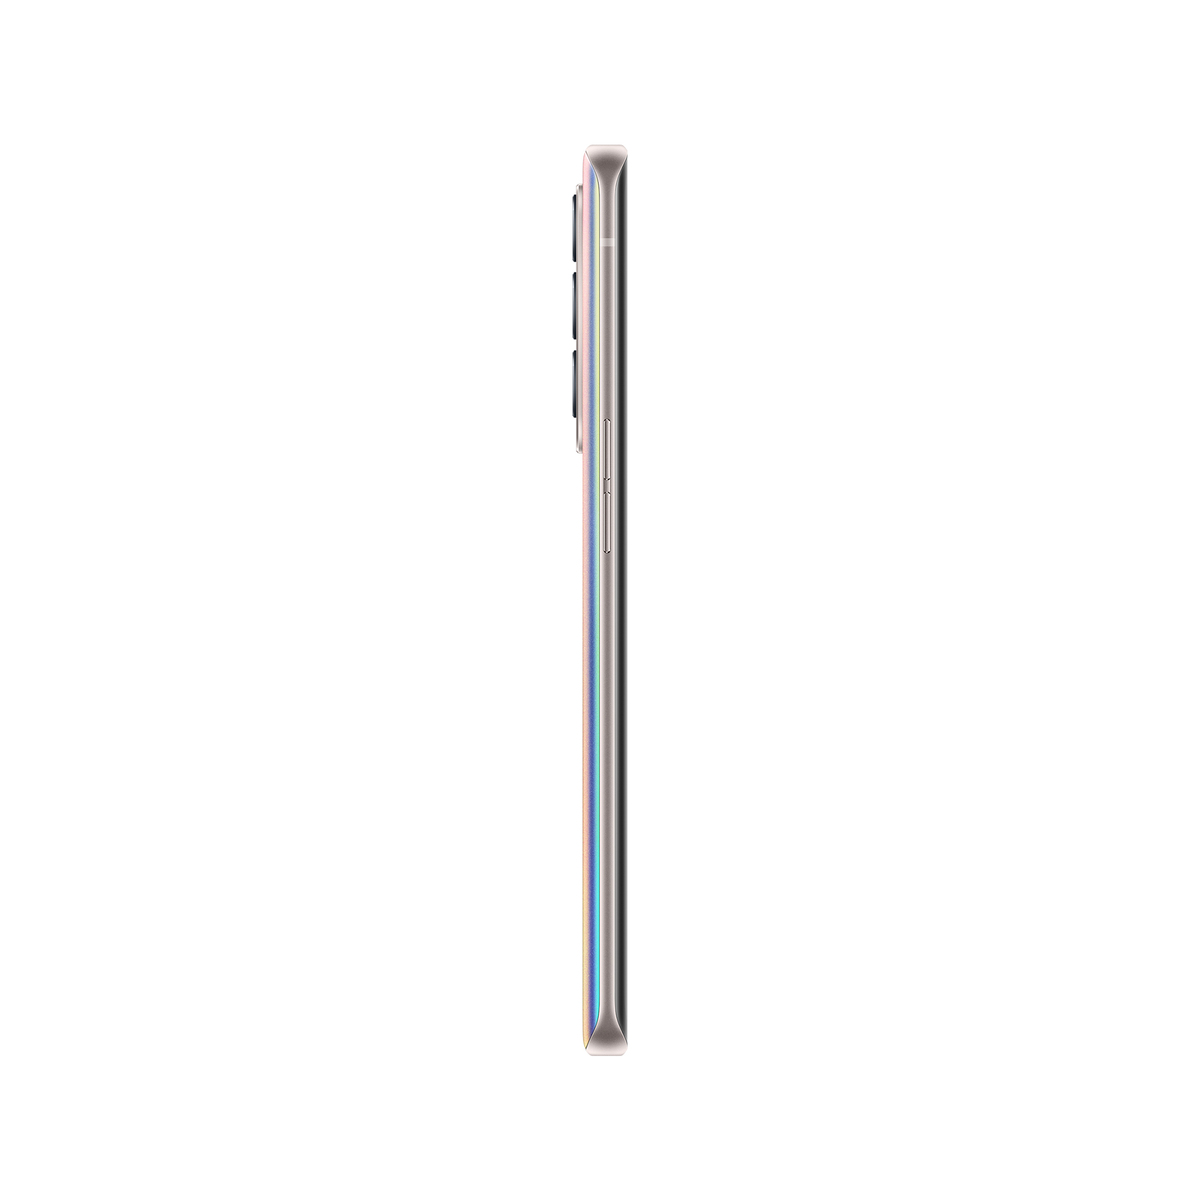 Oppo Reno5 Pro 256GB 5G Galaxtic Silver